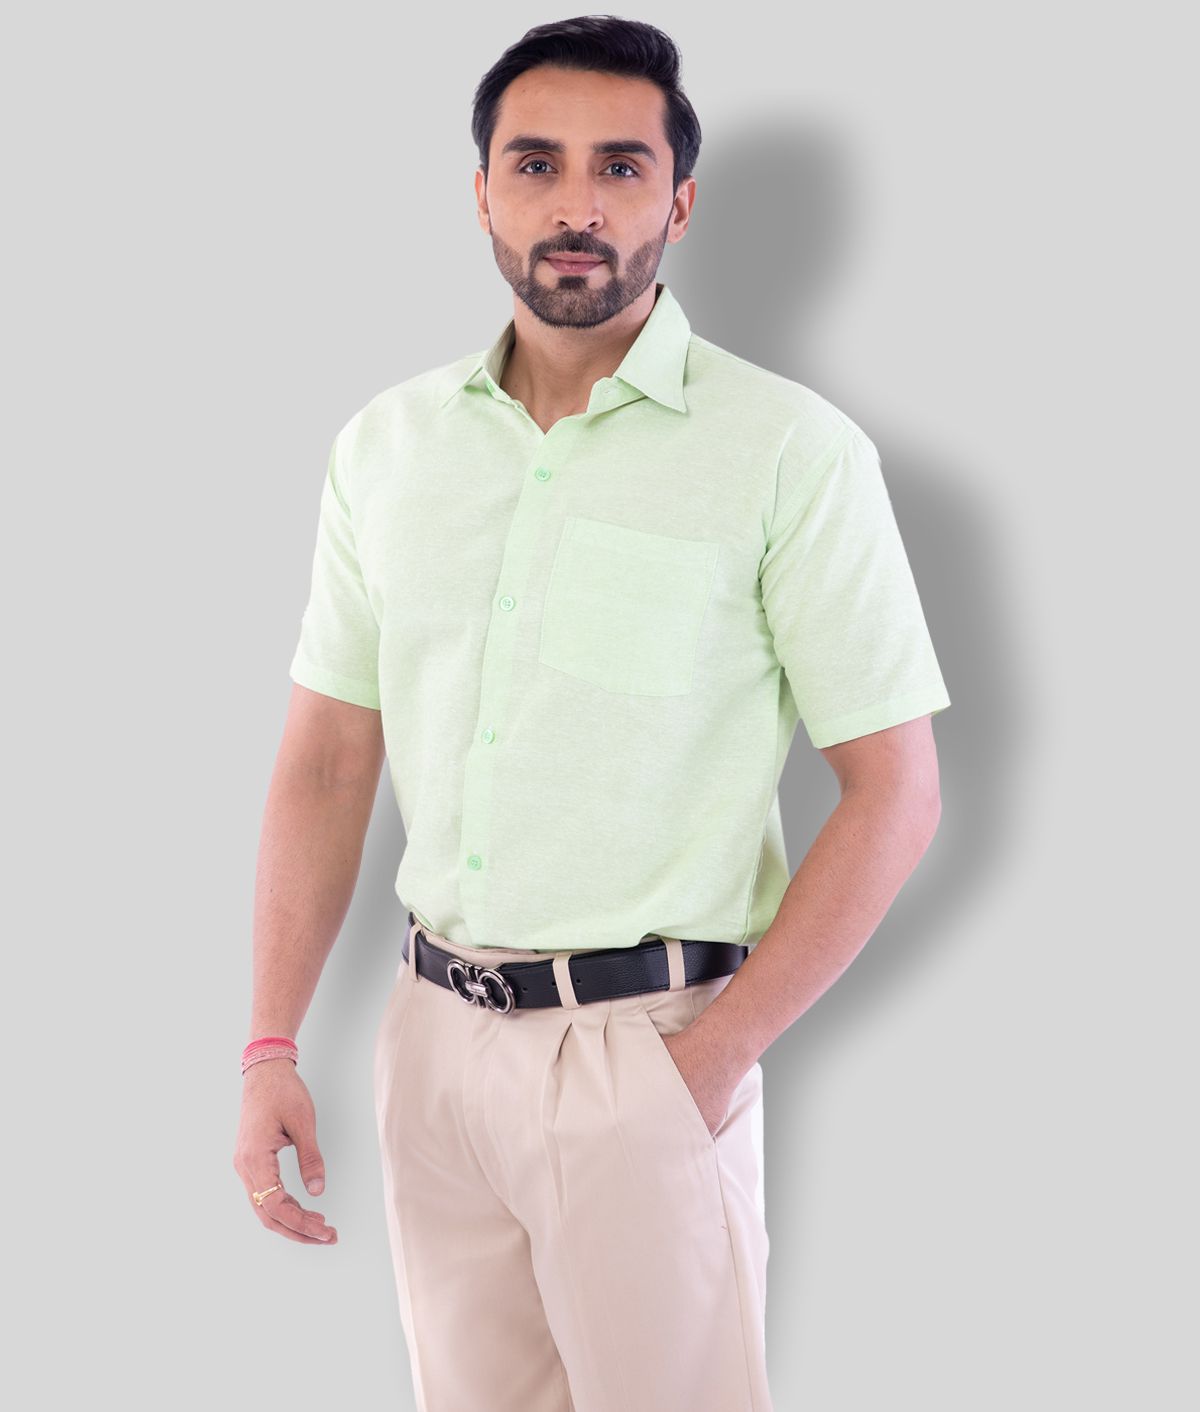     			DESHBANDHU DBK - Green Cotton Regular Fit Men's Casual Shirt (Pack of 1 )